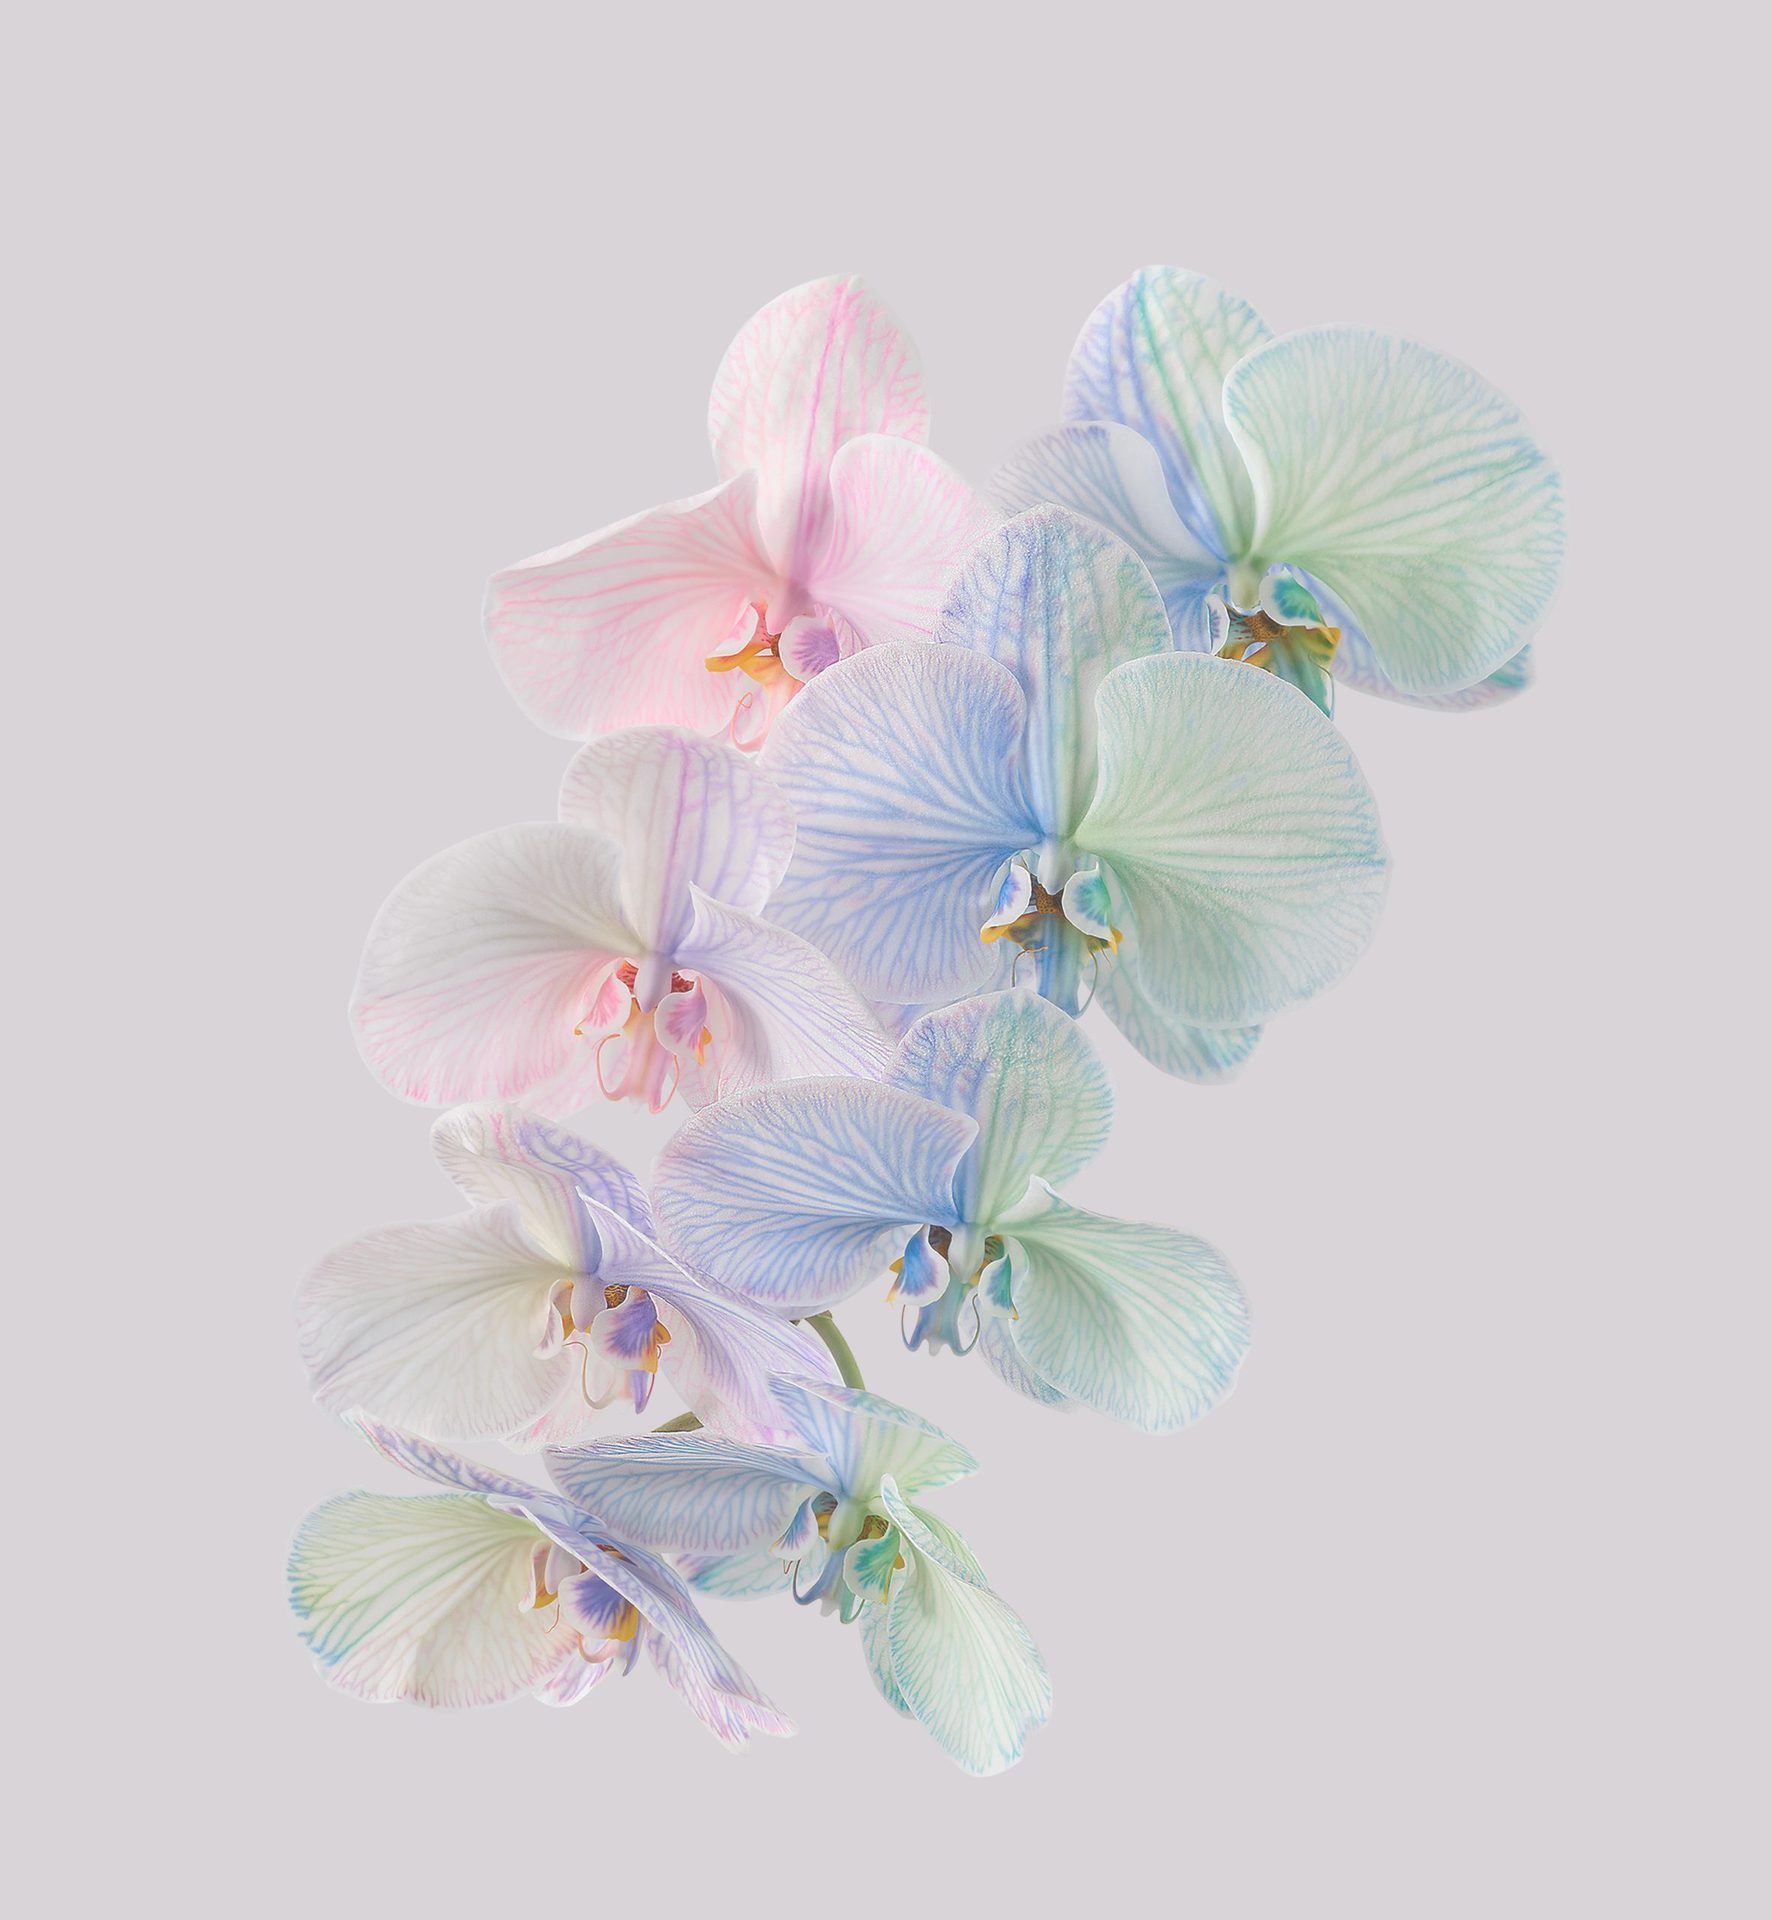 Pixel 6 Pro Wallpaper Moth Orchid Light by Andrew Zuckerman